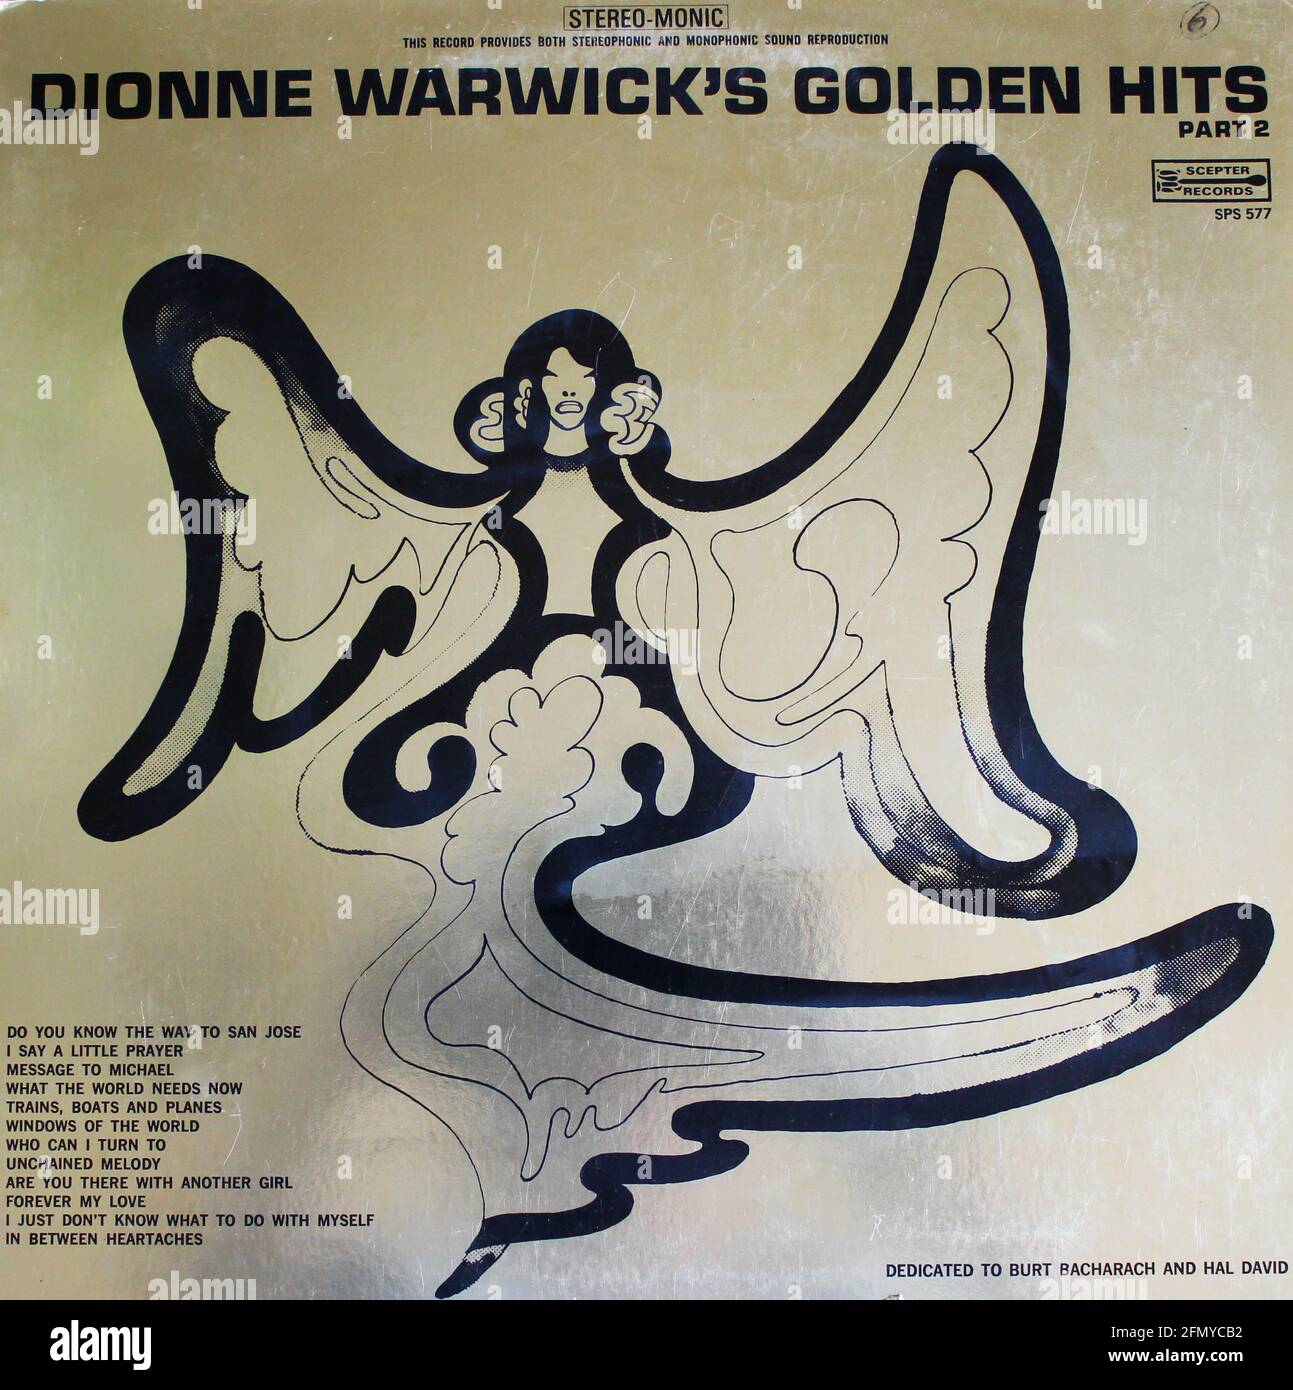 Funk y soul artista, Dionne Warwick álbum de música en disco de vinilo LP. Título: Dionne Warwick's Golden Hits Part 2 álbum de portada Foto de stock